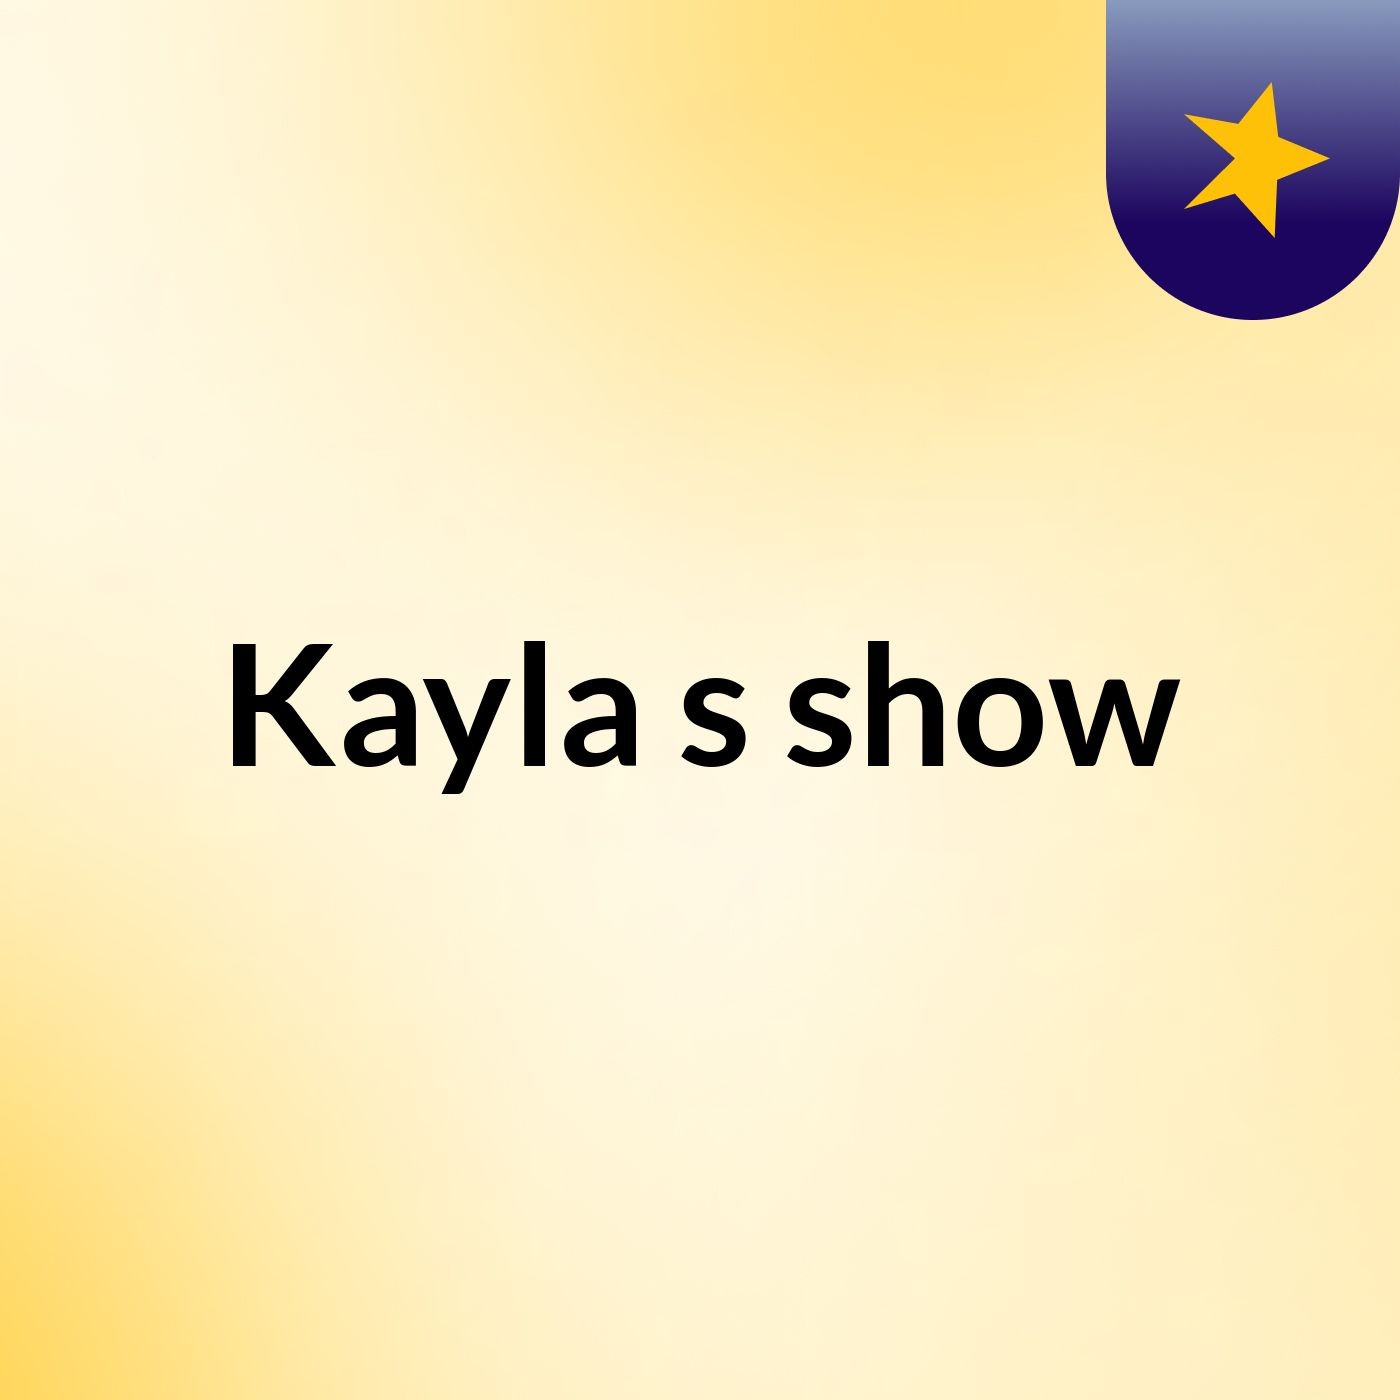 Kayla's show